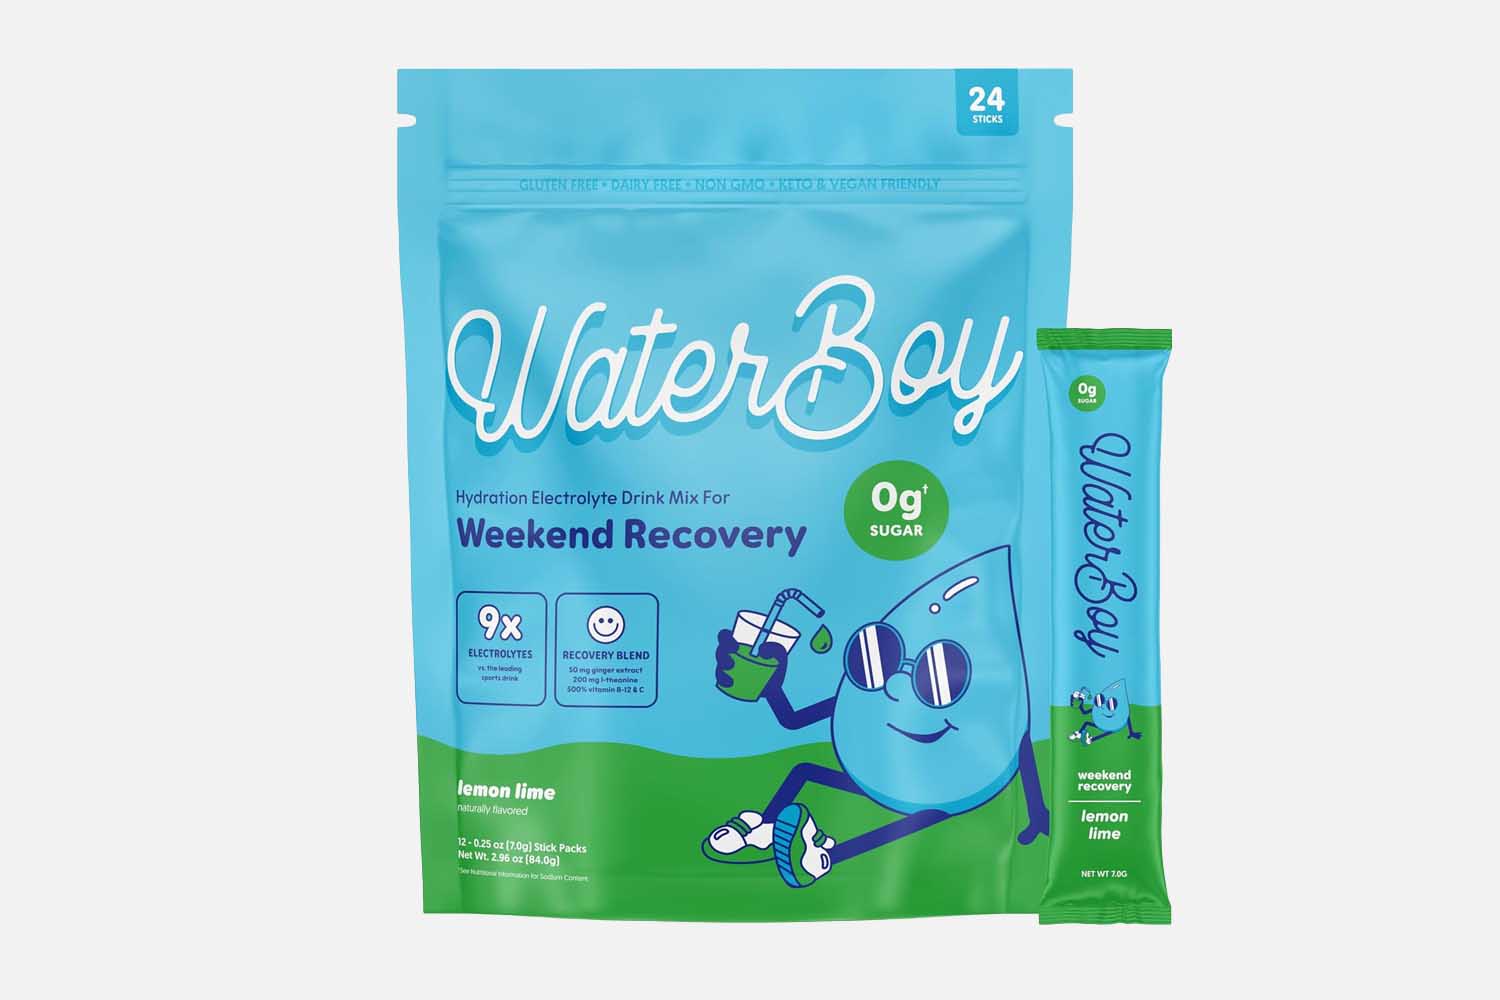 Waterboy Weekend Recovery